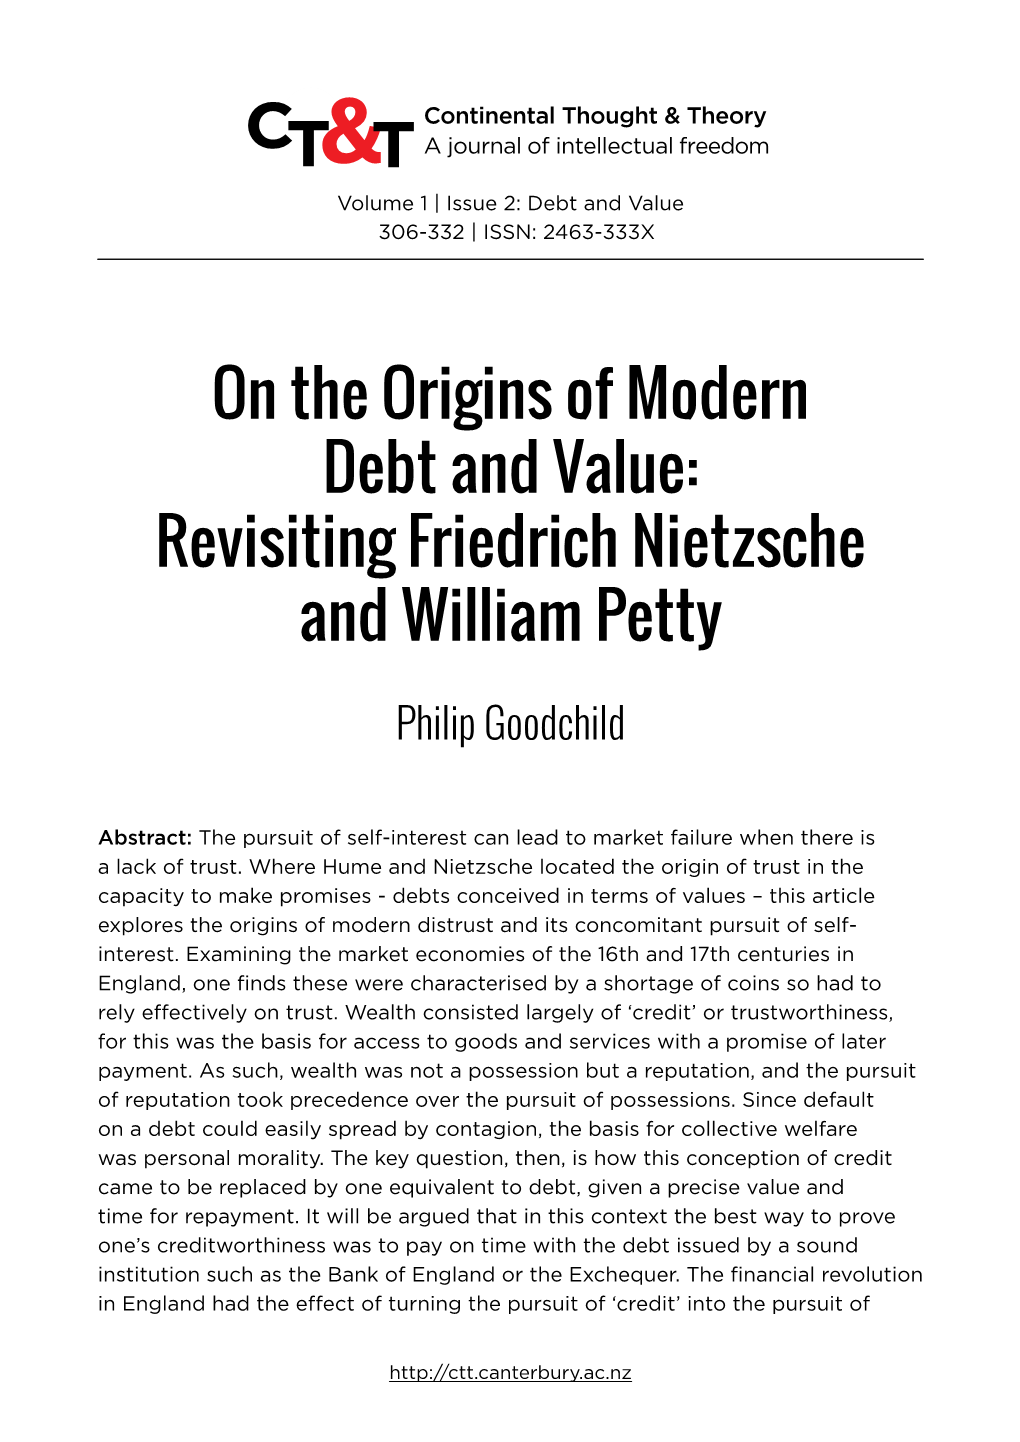 Revisiting Friedrich Nietzsche and William Petty